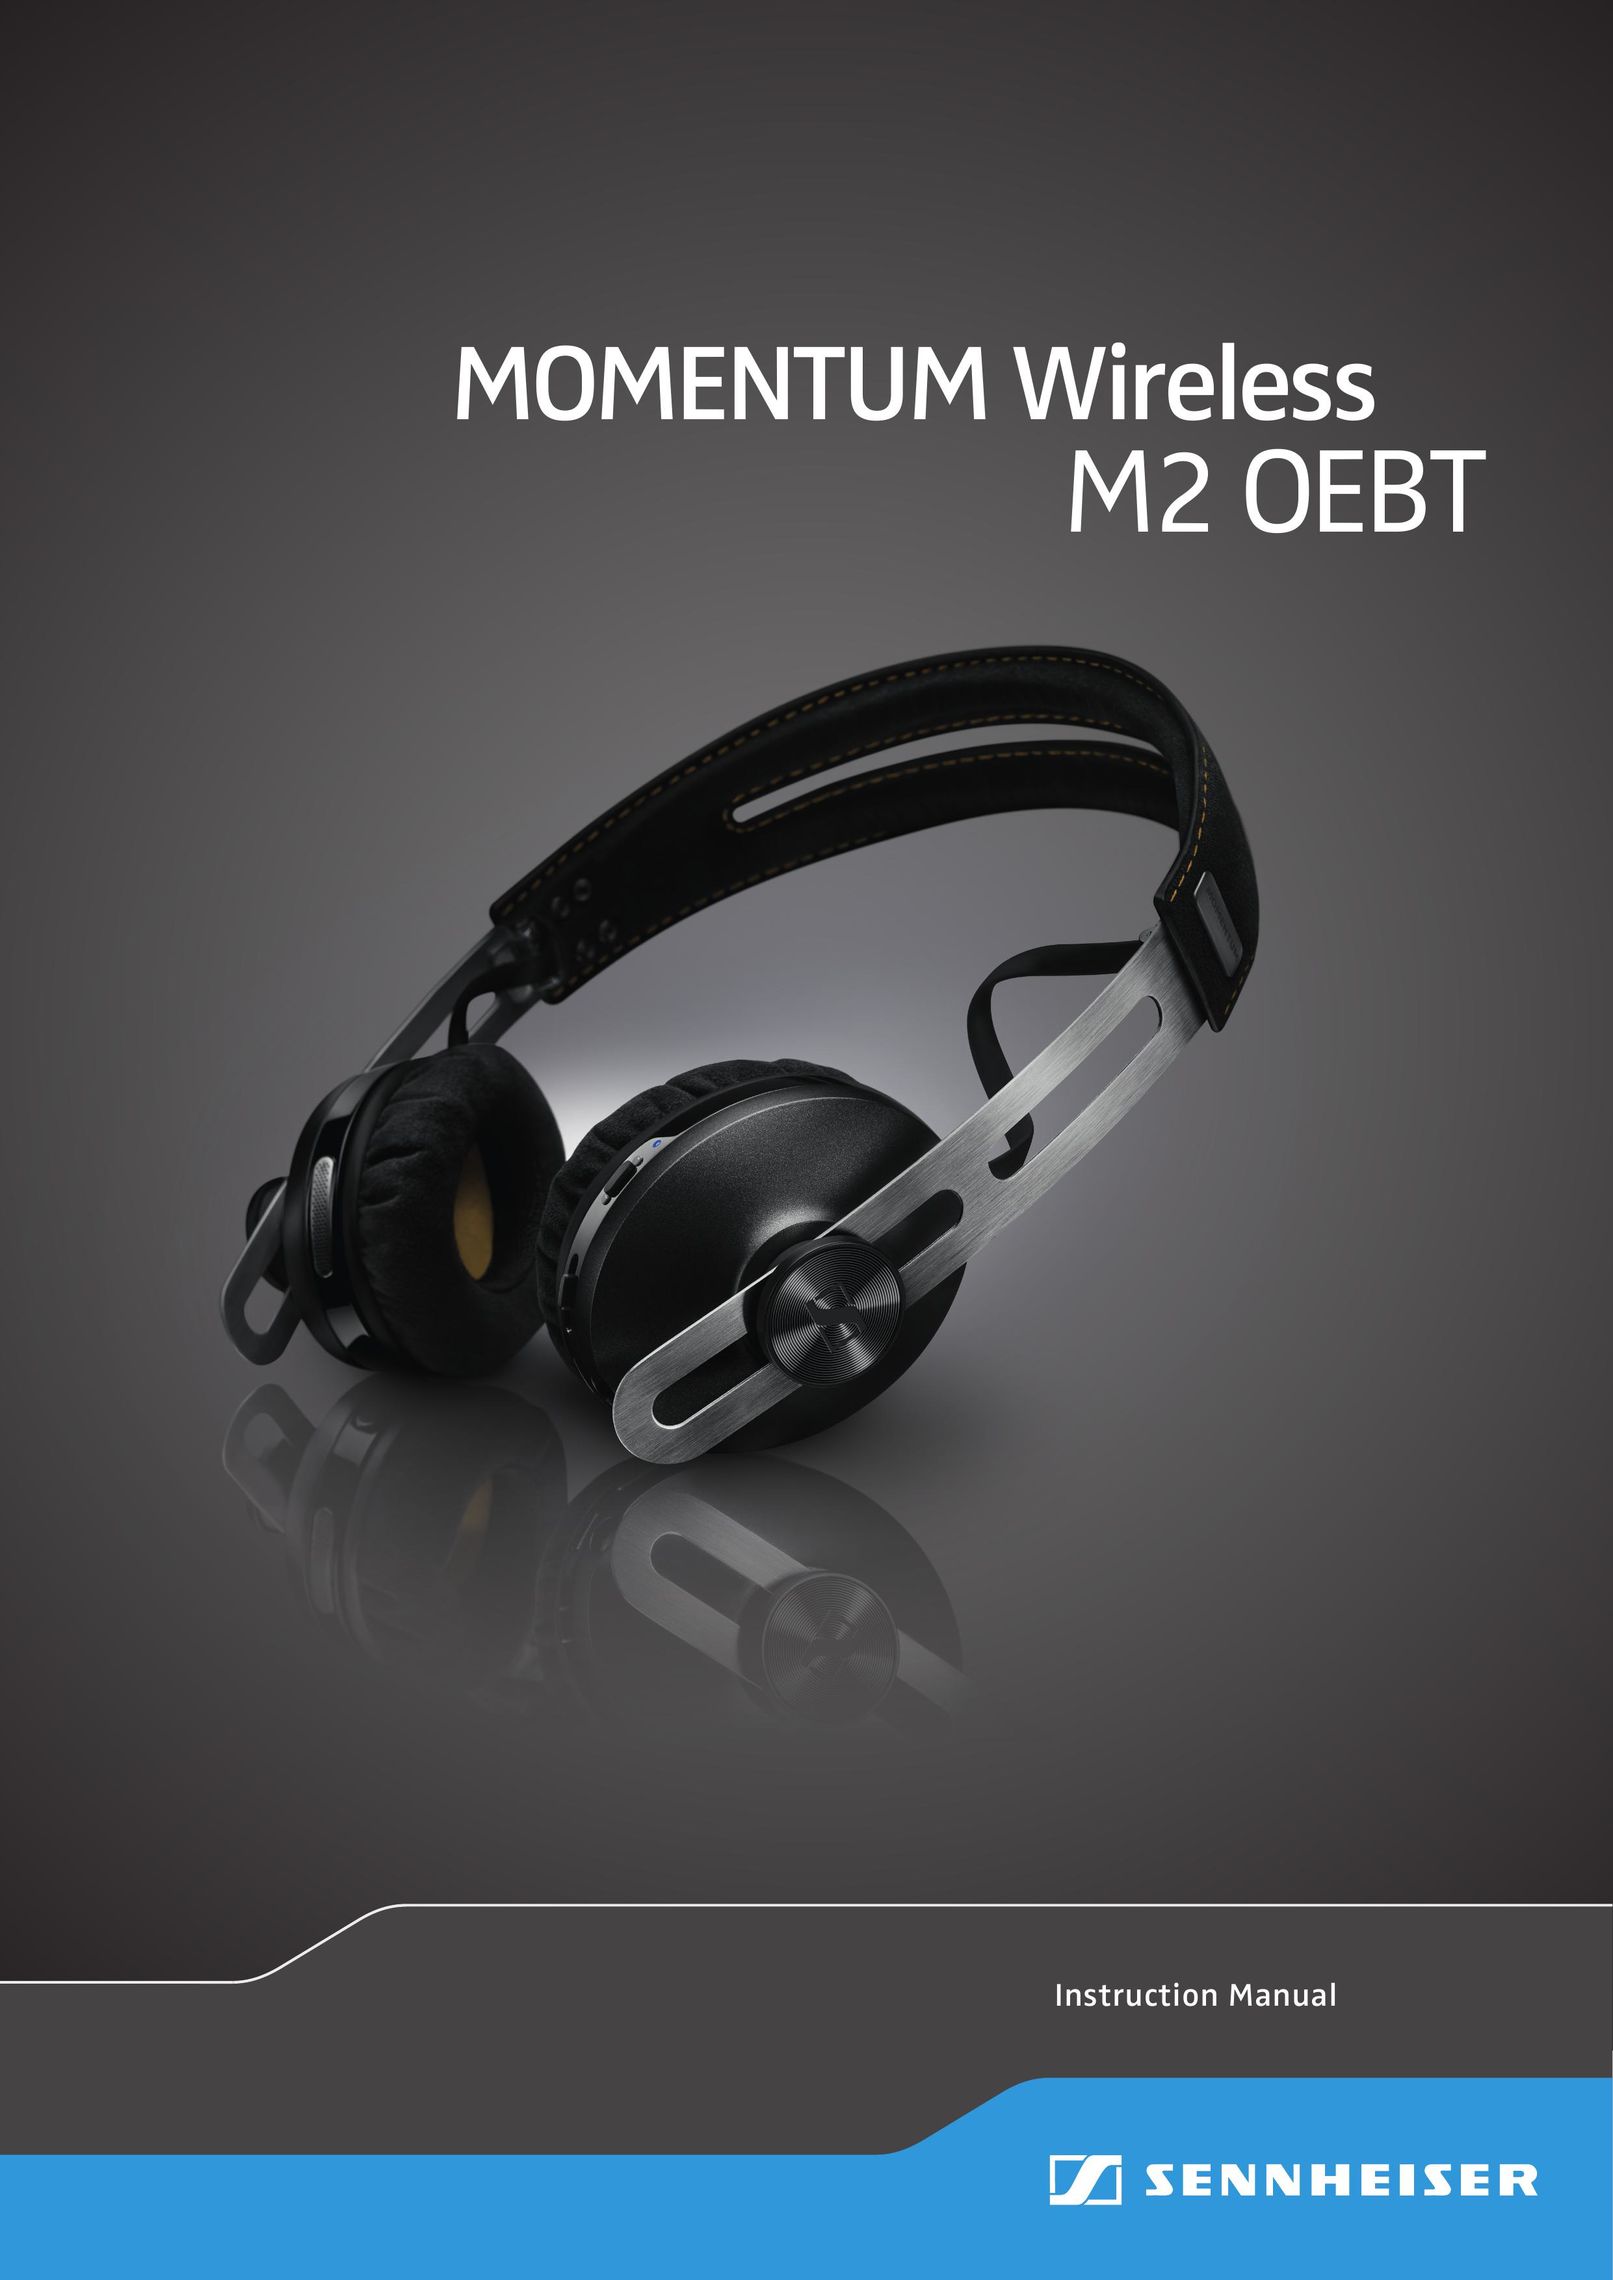 Momentum Sales & Marketing M2 OEBT Headphones User Manual